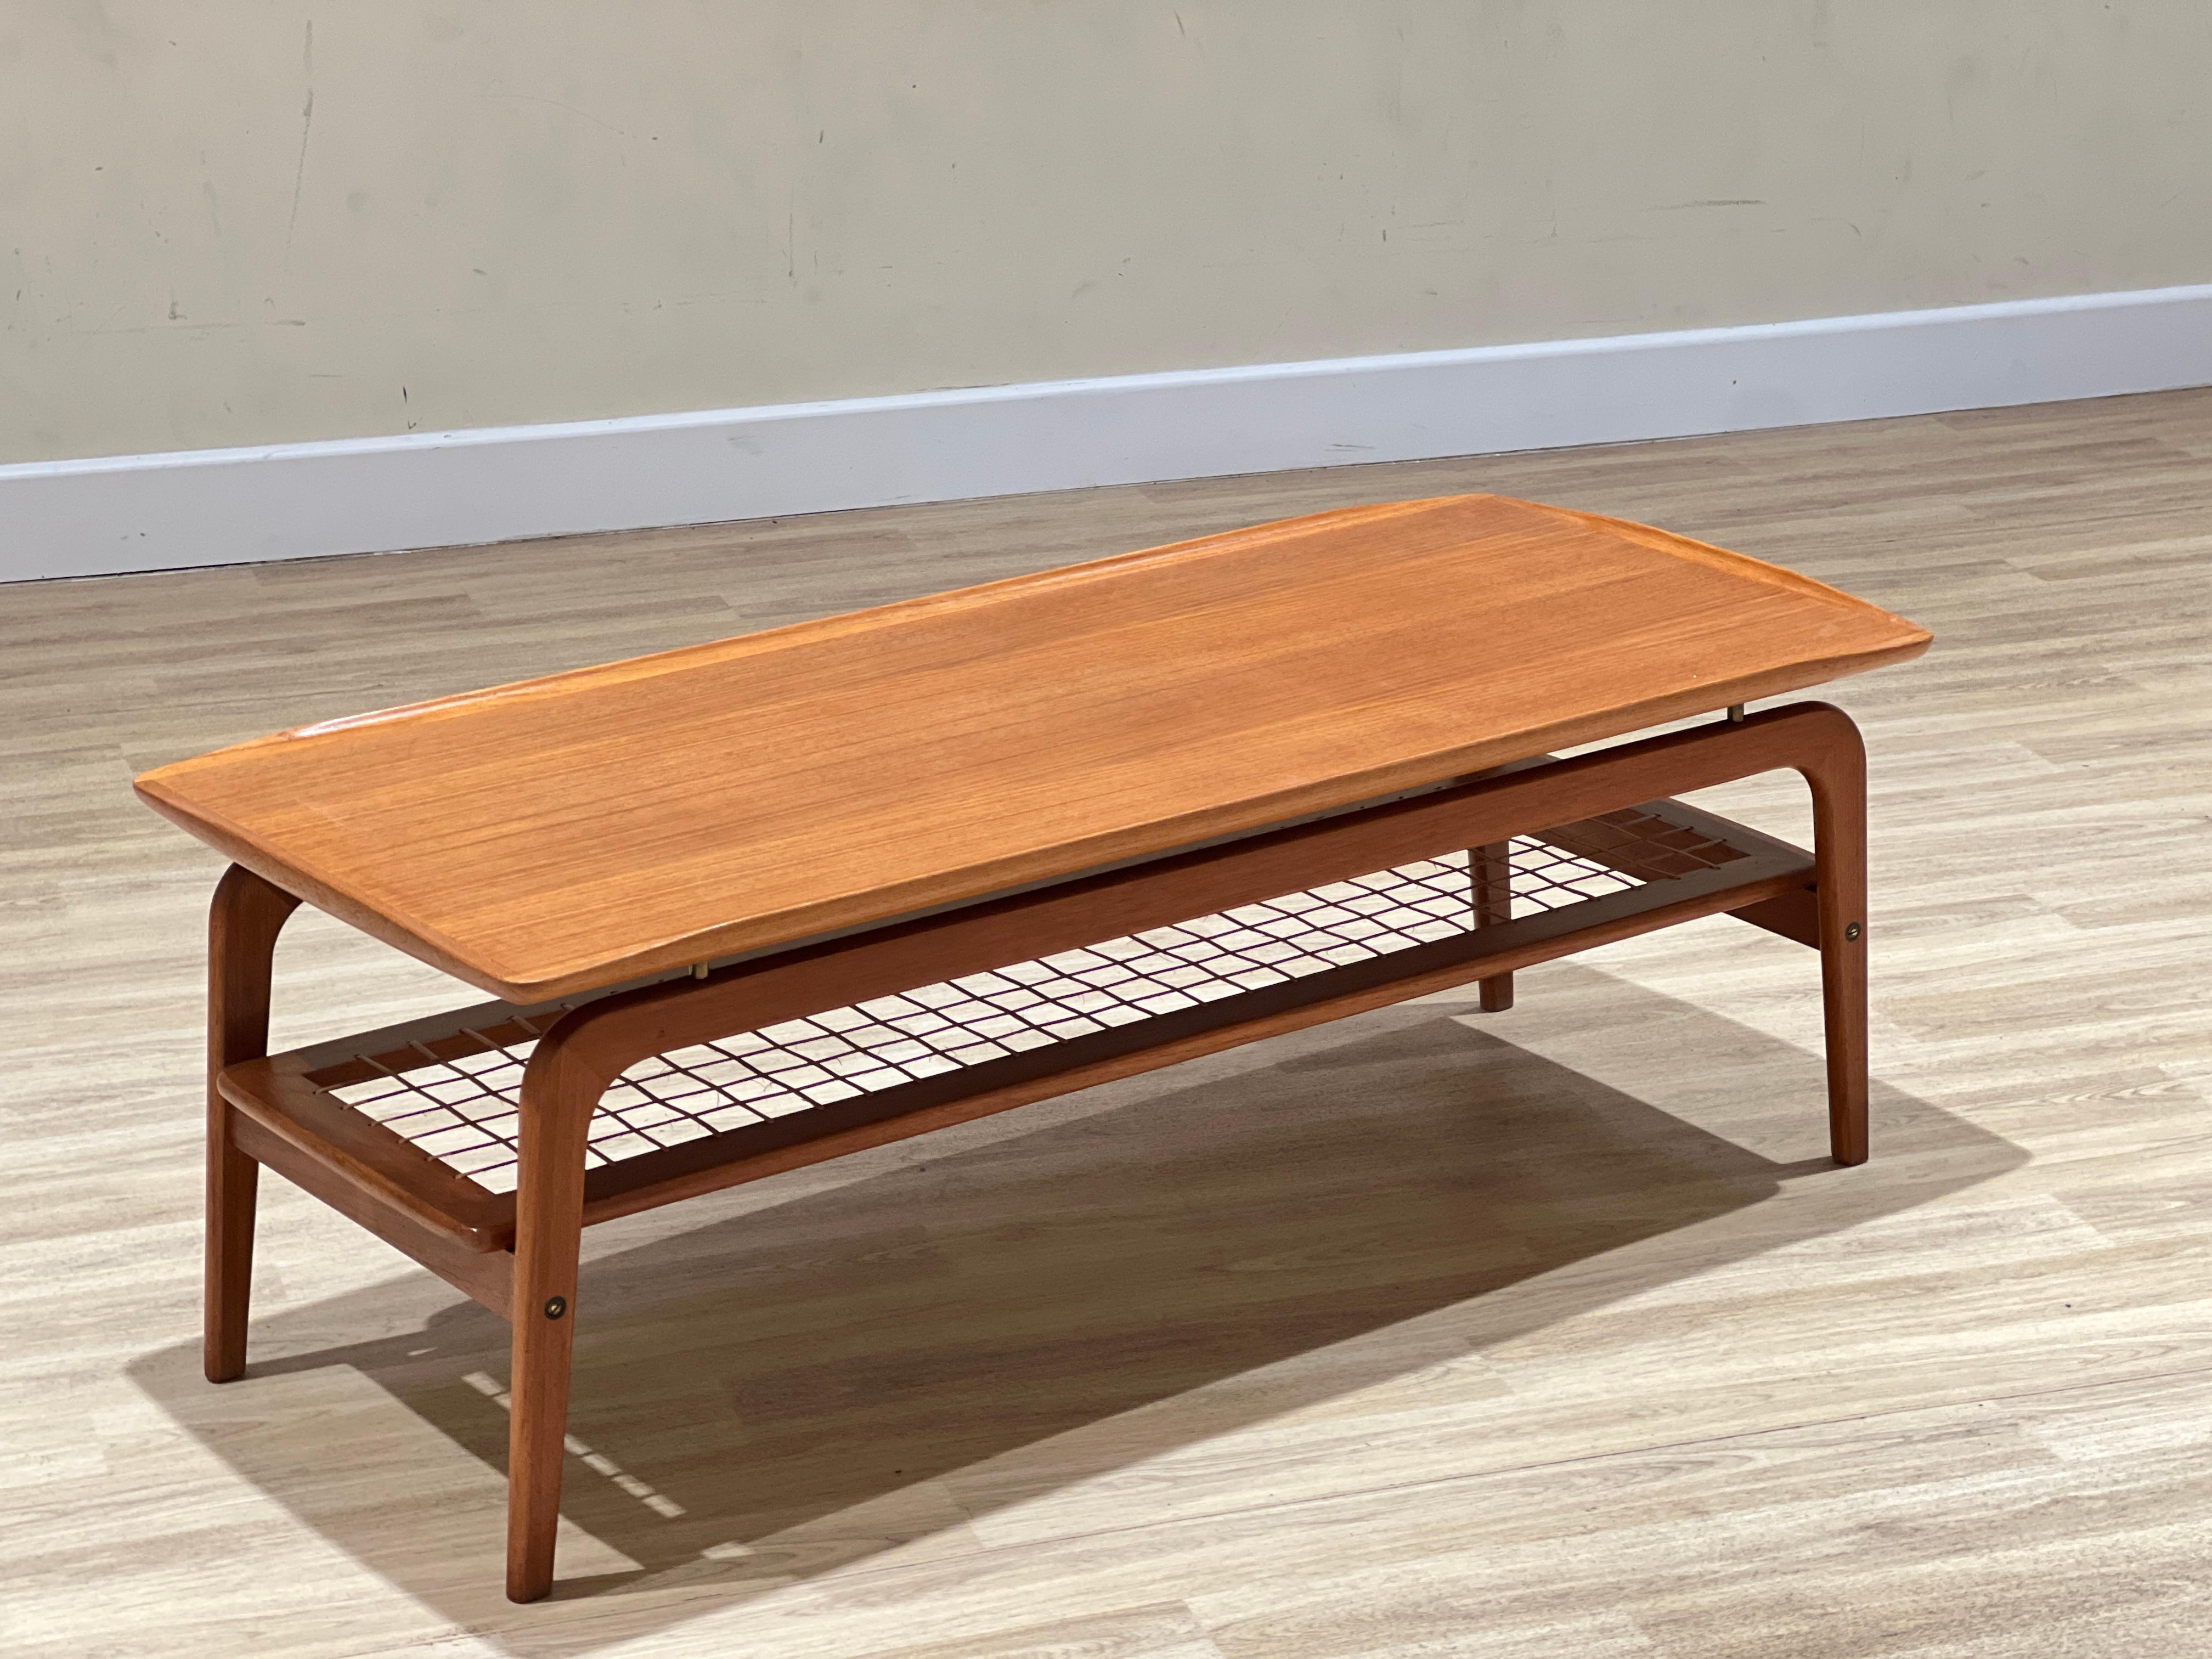 20th Century Arne Hovmand-Olsen coffee table with a rattan rack